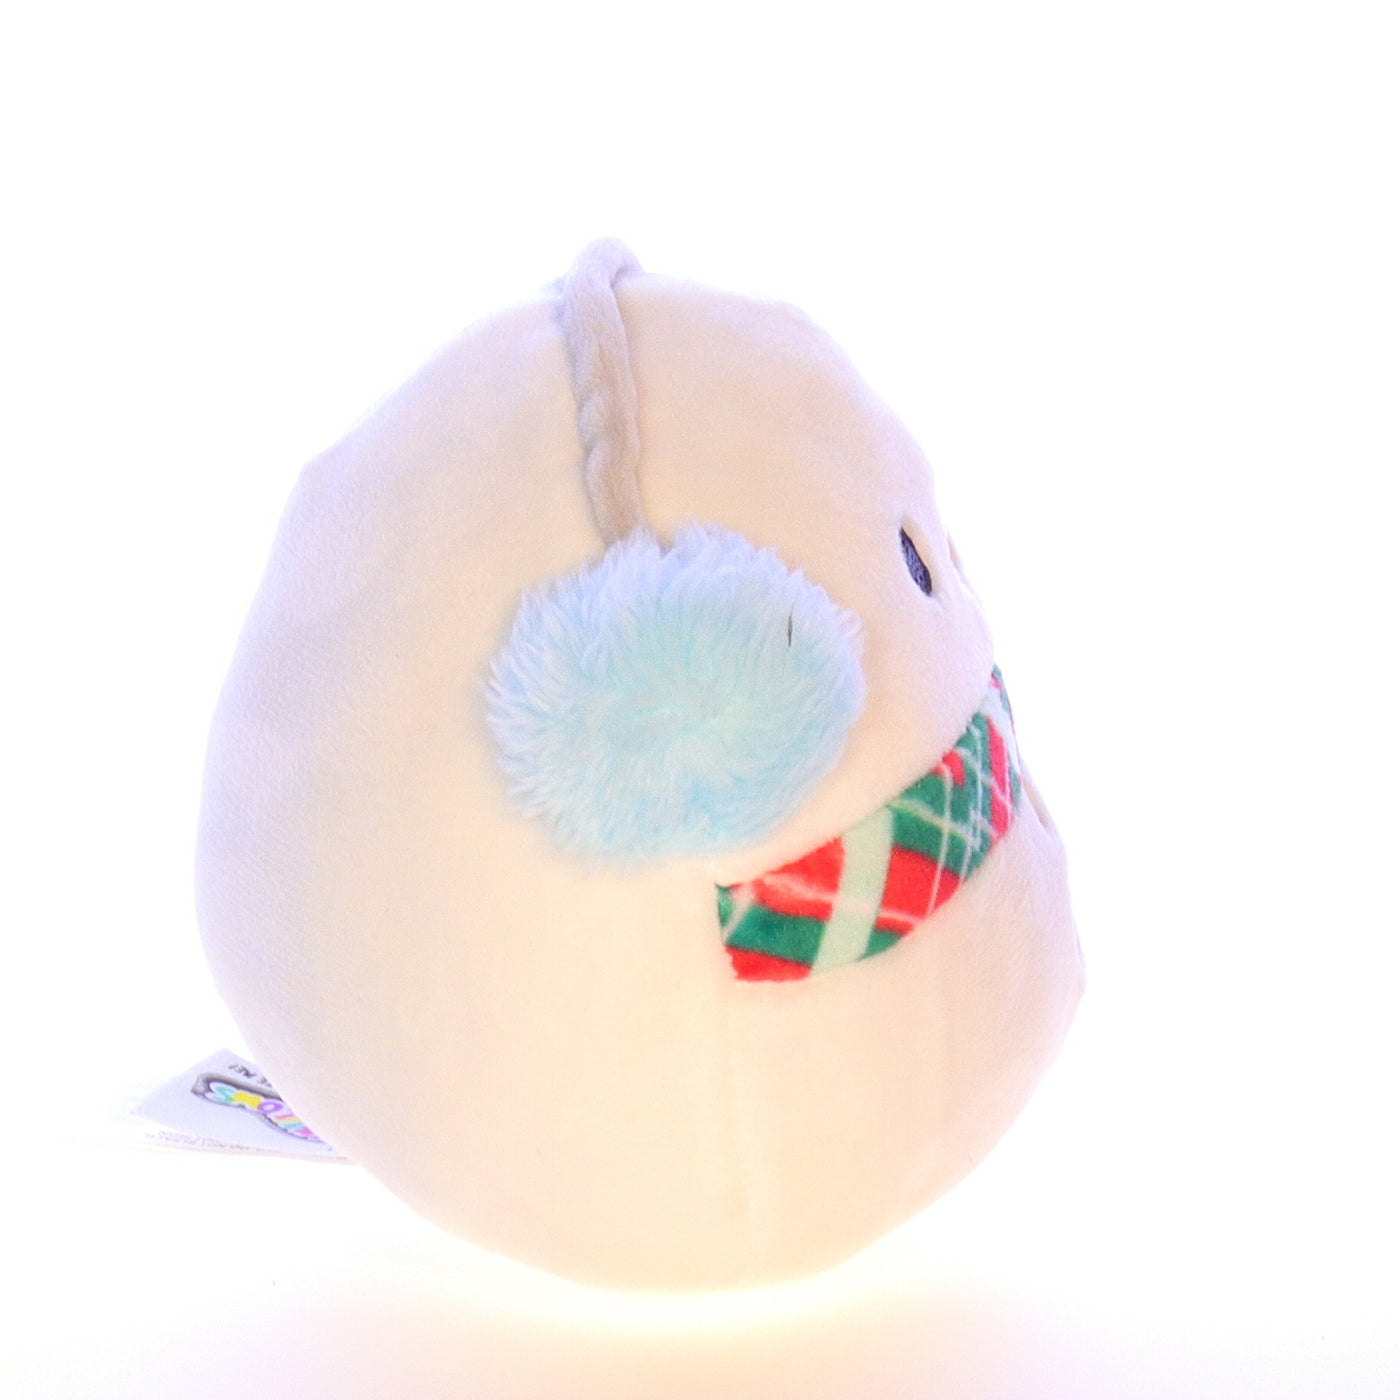 Squishmallows Plush Christmas Stuffed Animal 734689425334 Manny the Snowman 2020